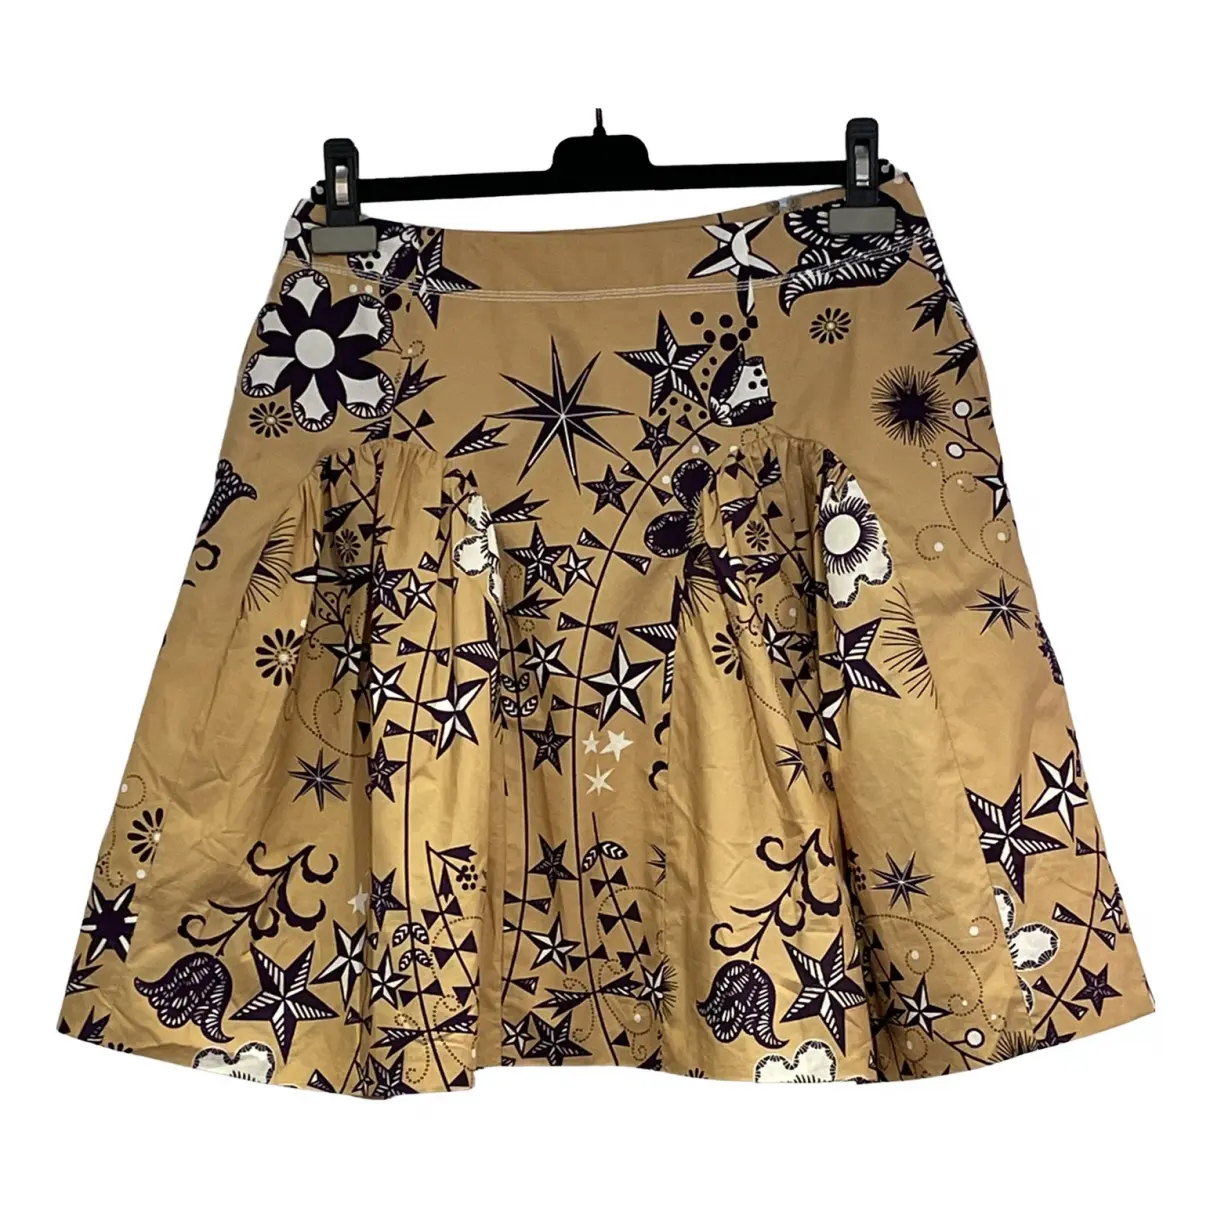 Skirt Nina Ricci